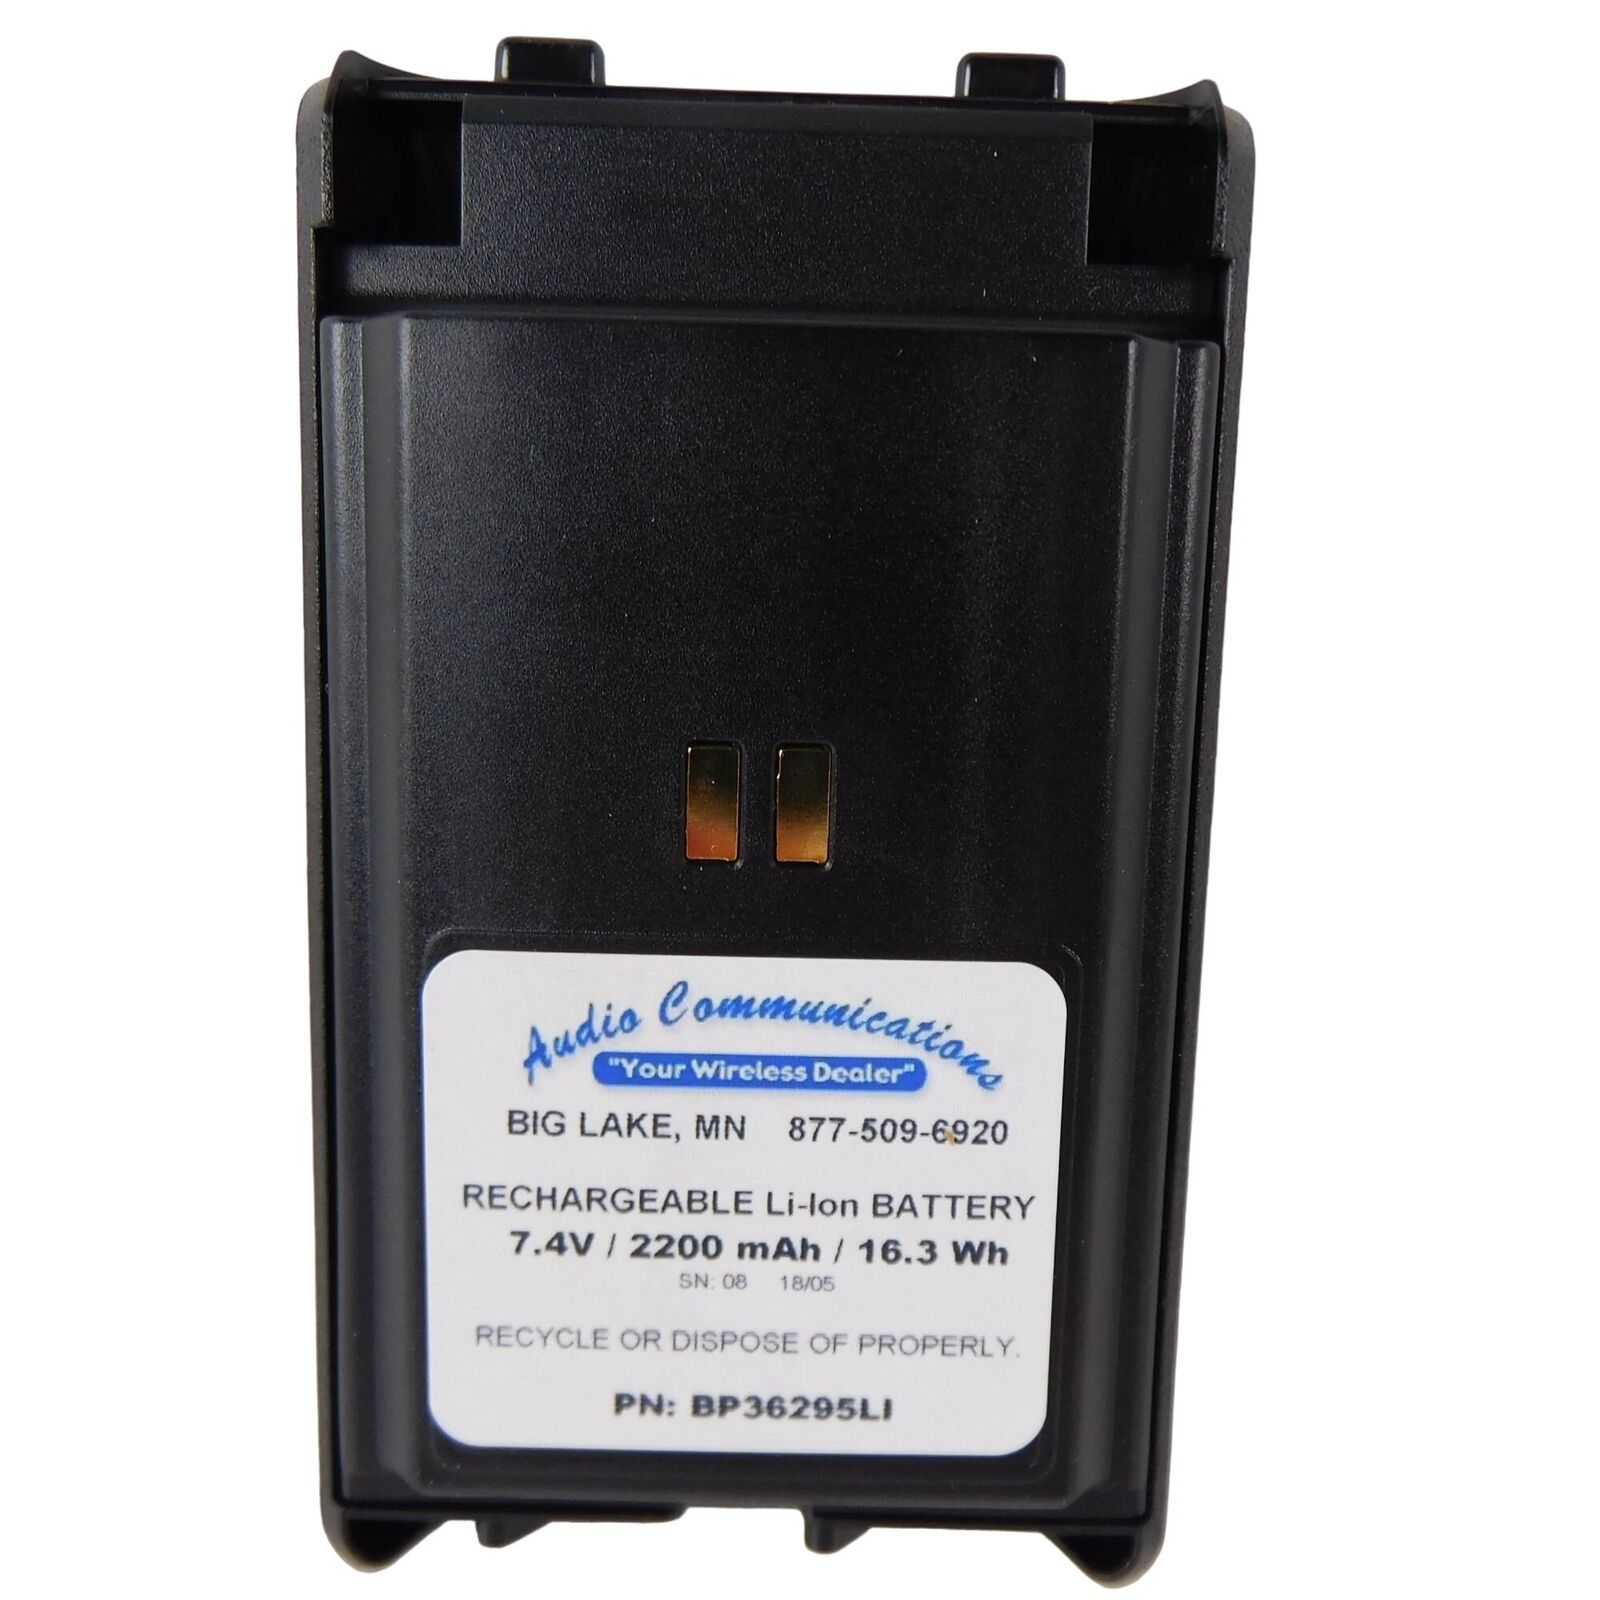 Rechargeable Li-ion Battery 2200 mAh 7.4v 16.3wh